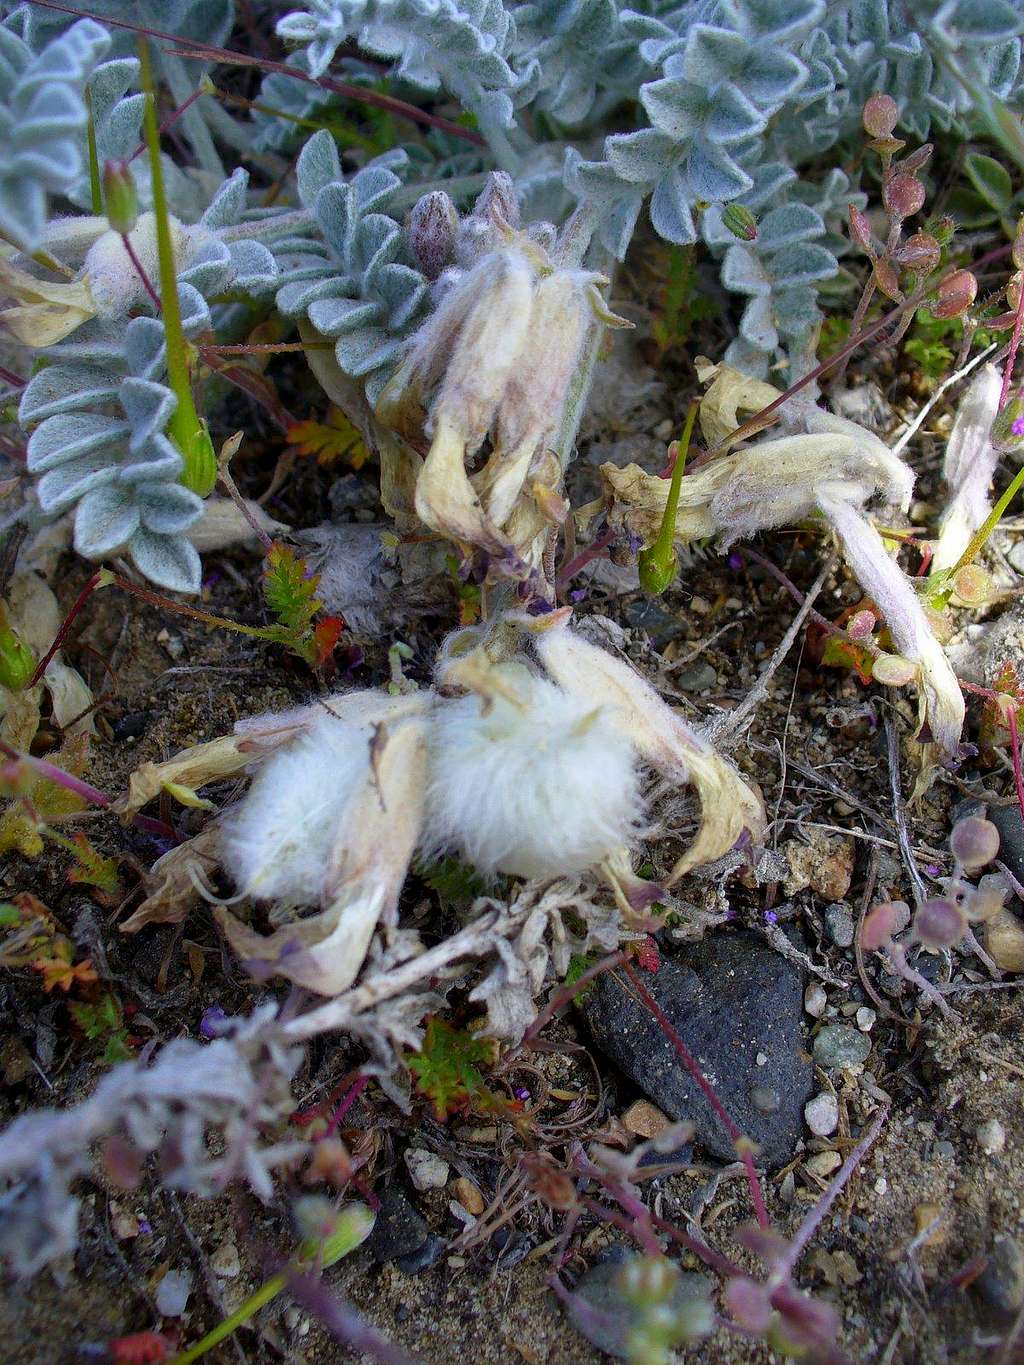 Furry Pods of Astragalus utahensis